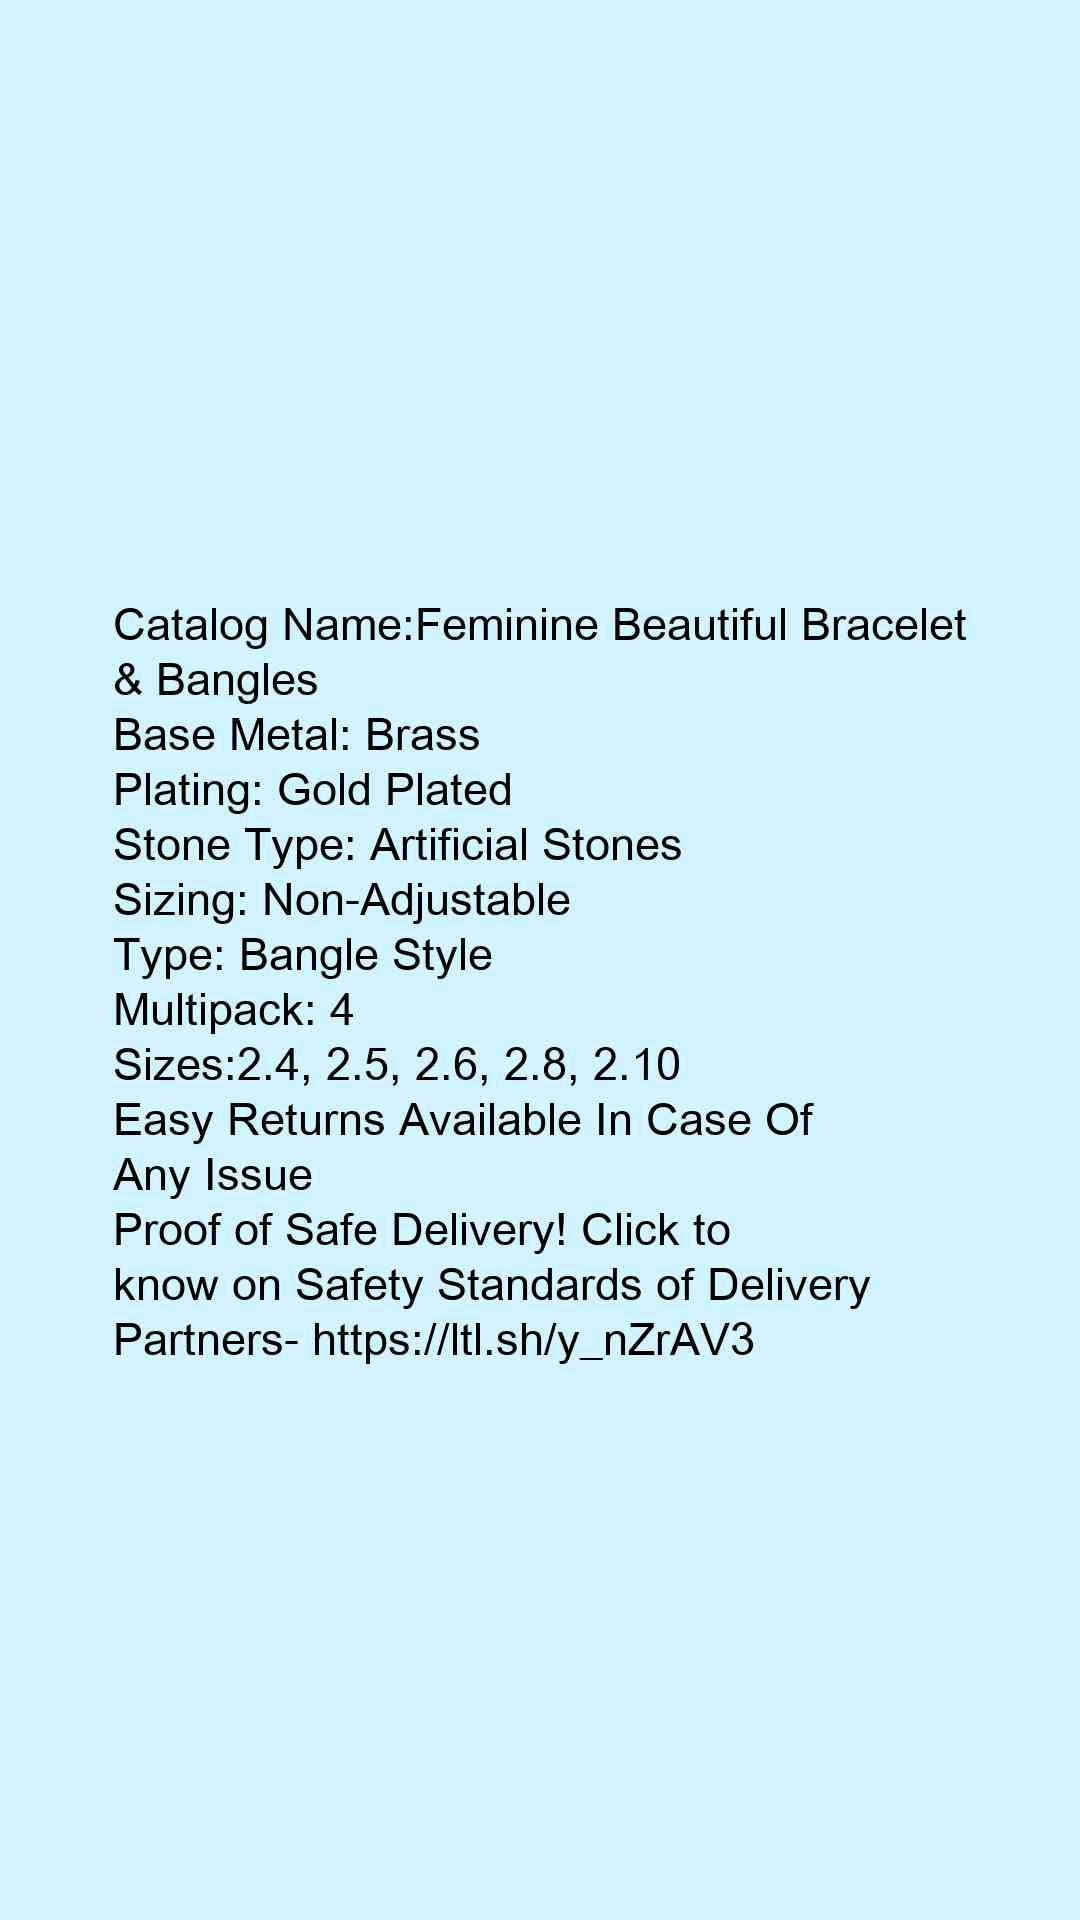 Feminine Beautiful Bracelet & Bangles - Faritha